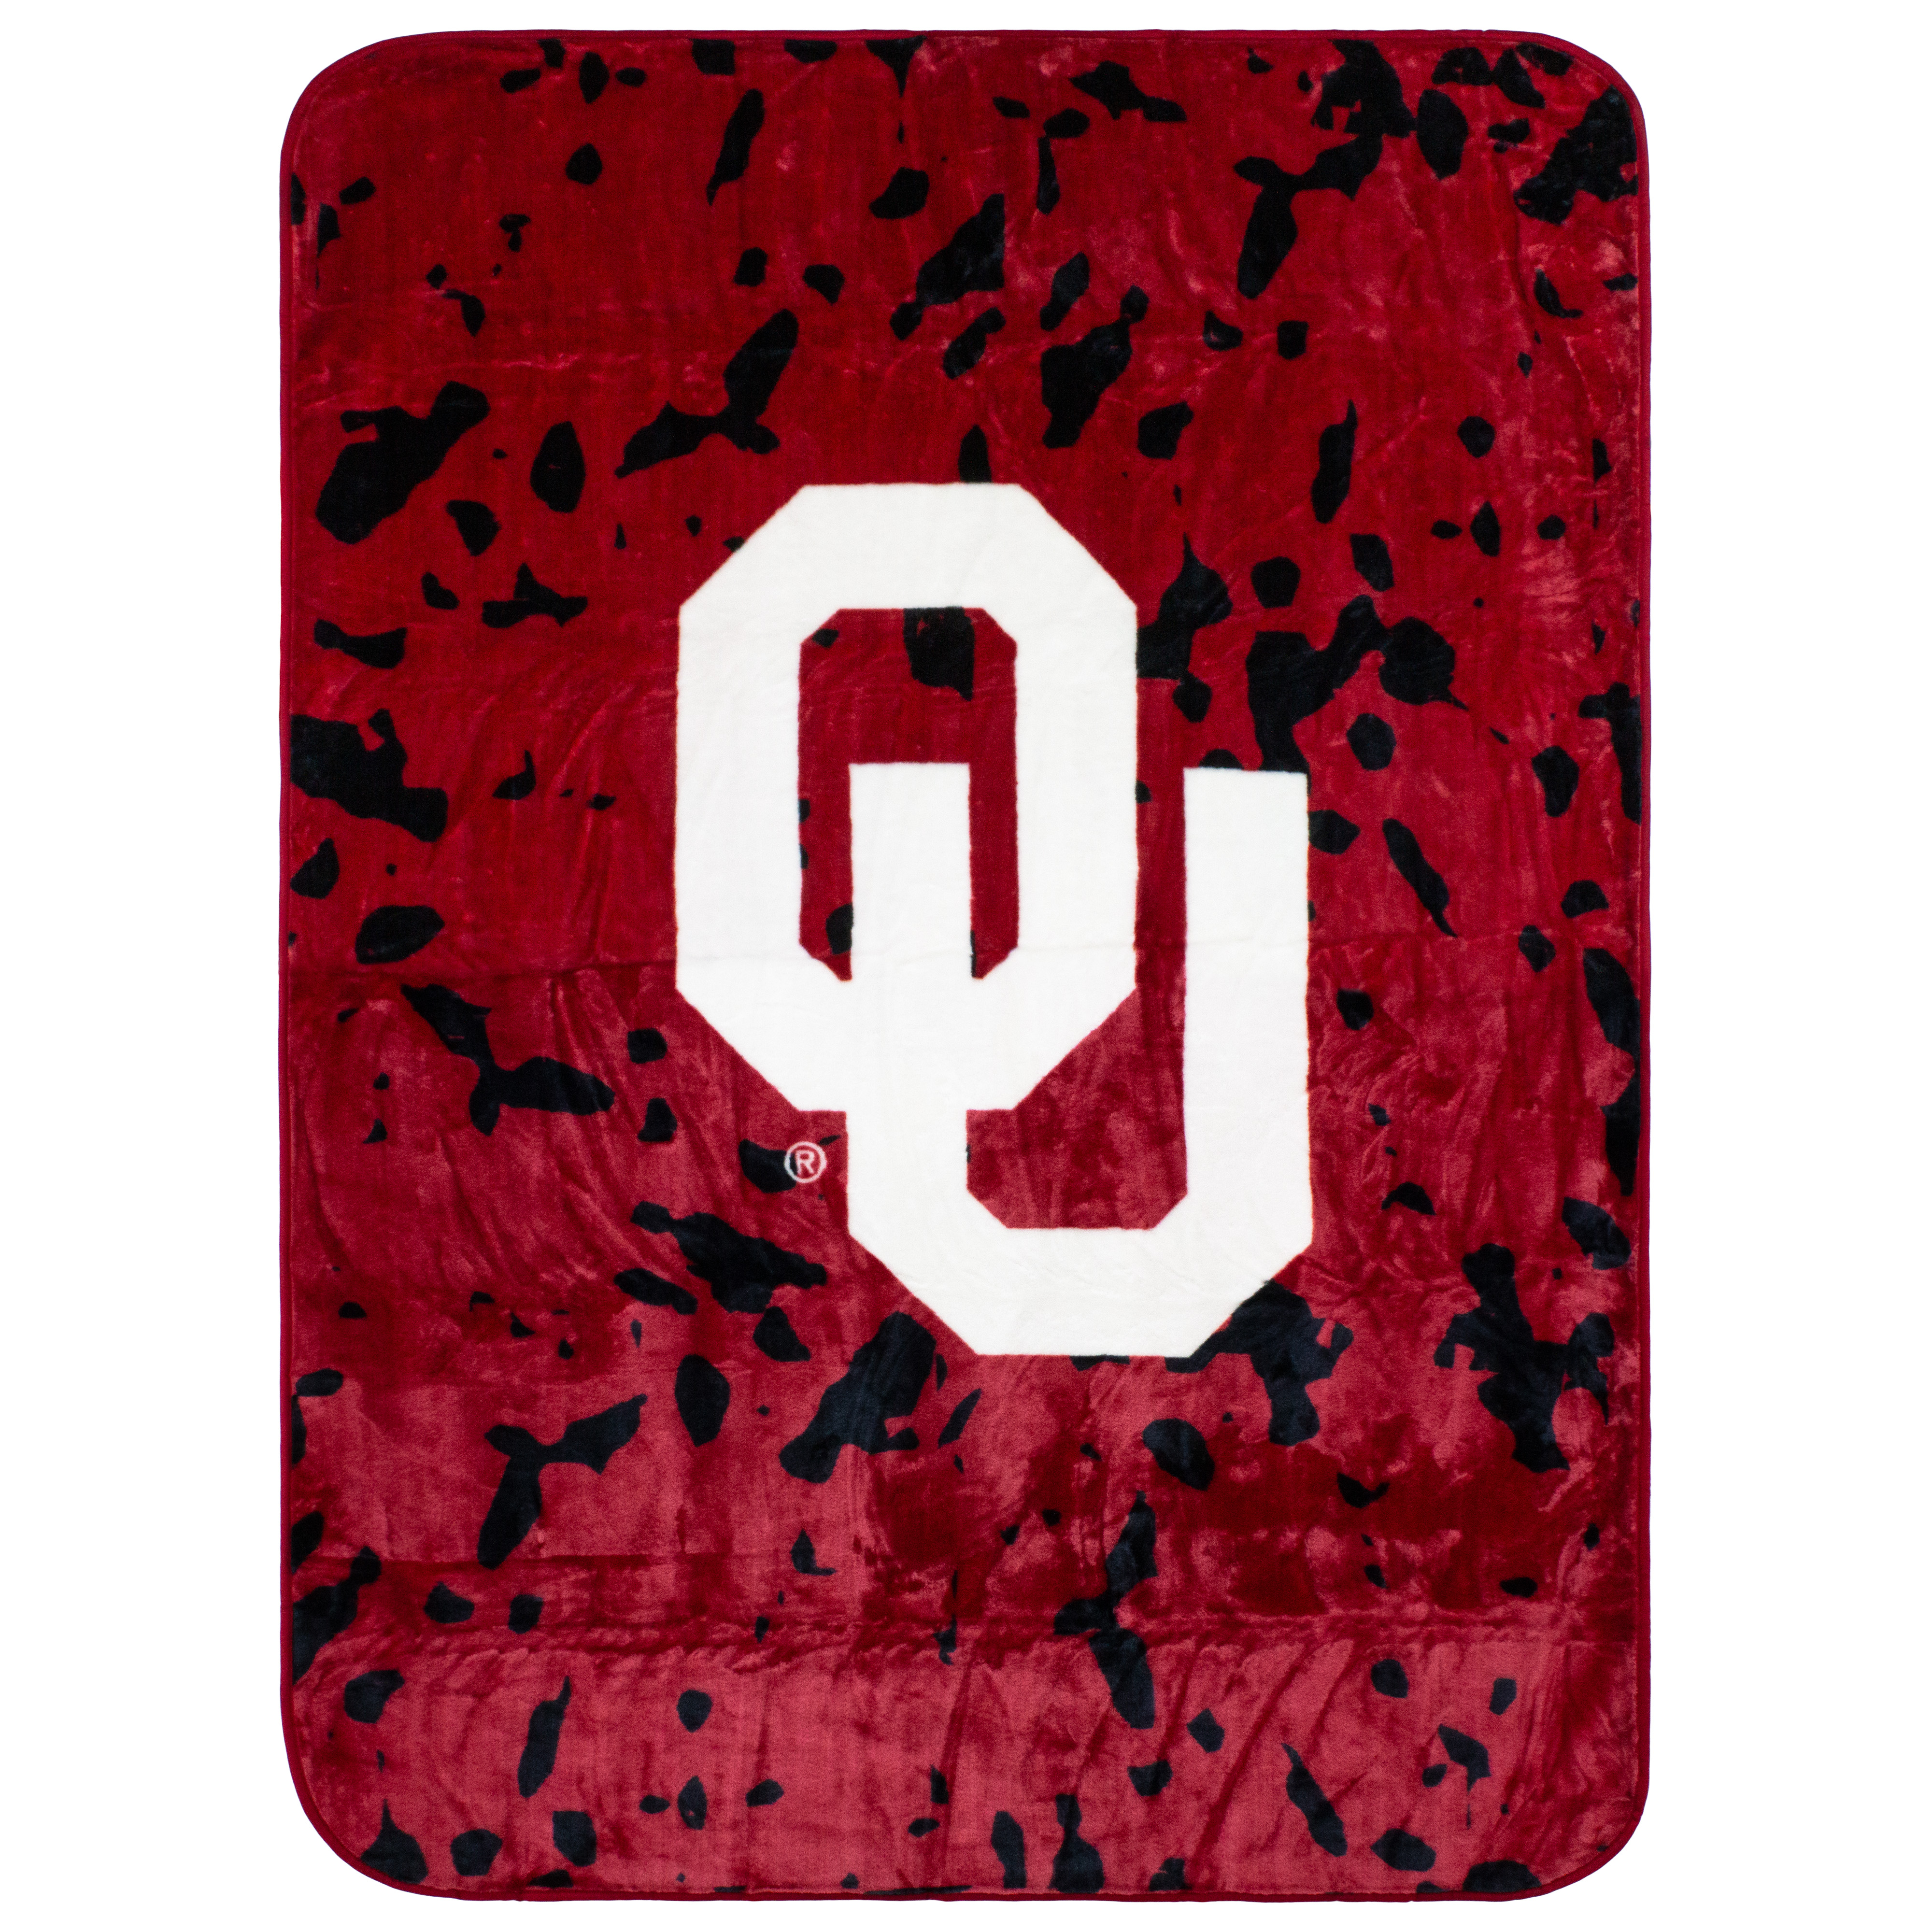 College Covers Oklahoma Sooners Huge Raschel Throw Blanket, Bedspread, 86" x 63" - image 1 of 5